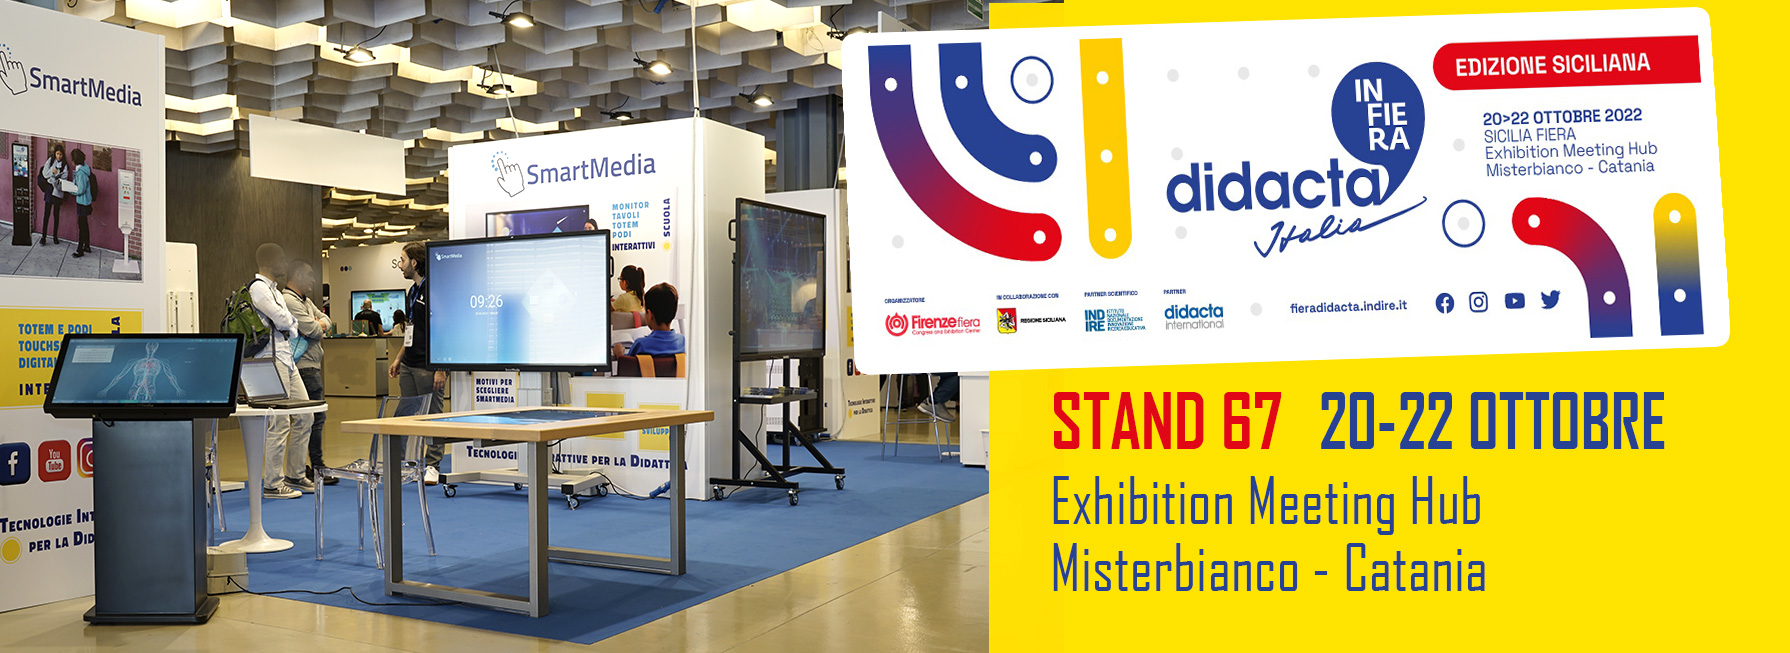 Didacta Sicilia 2022 - Smartmedia Stand 67, Exhibition Meeting Hub di Misterbianco (CT)